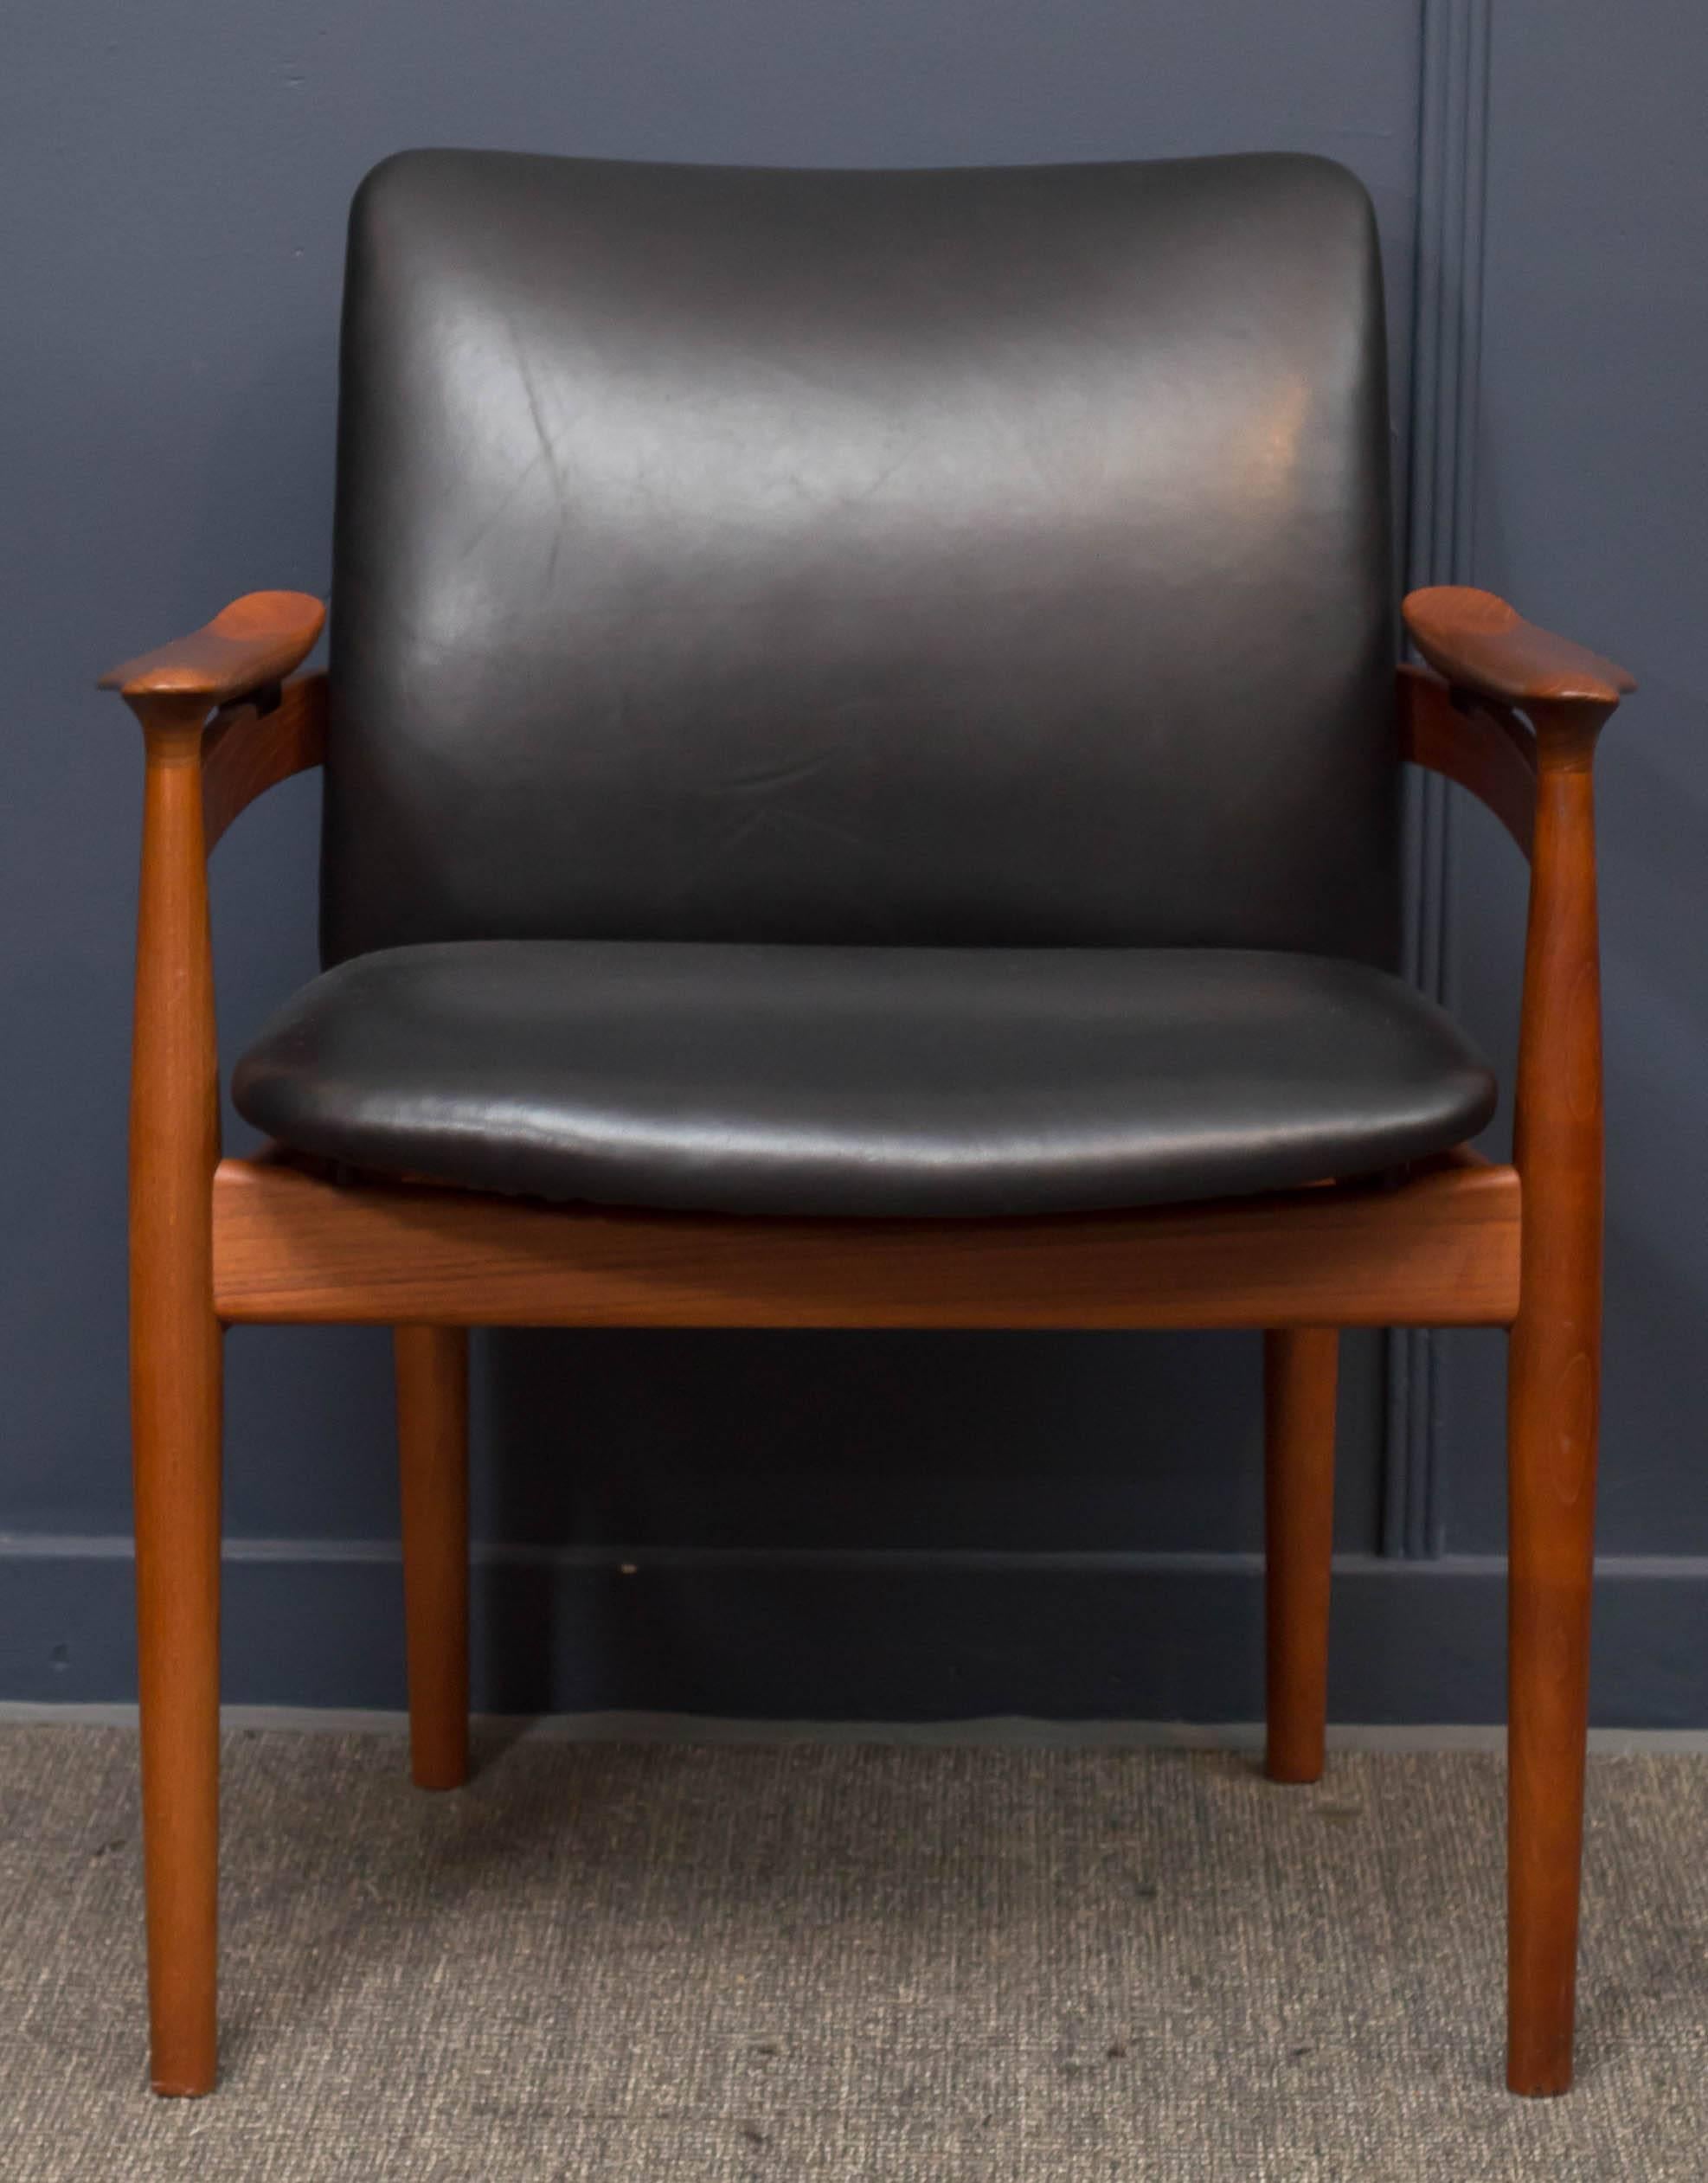 Finn Juhl design teak armchair Model 192 for France & Son, Denmark. Sculptural and comfortable desk or pull up armchair, newly upholstered in black leather.